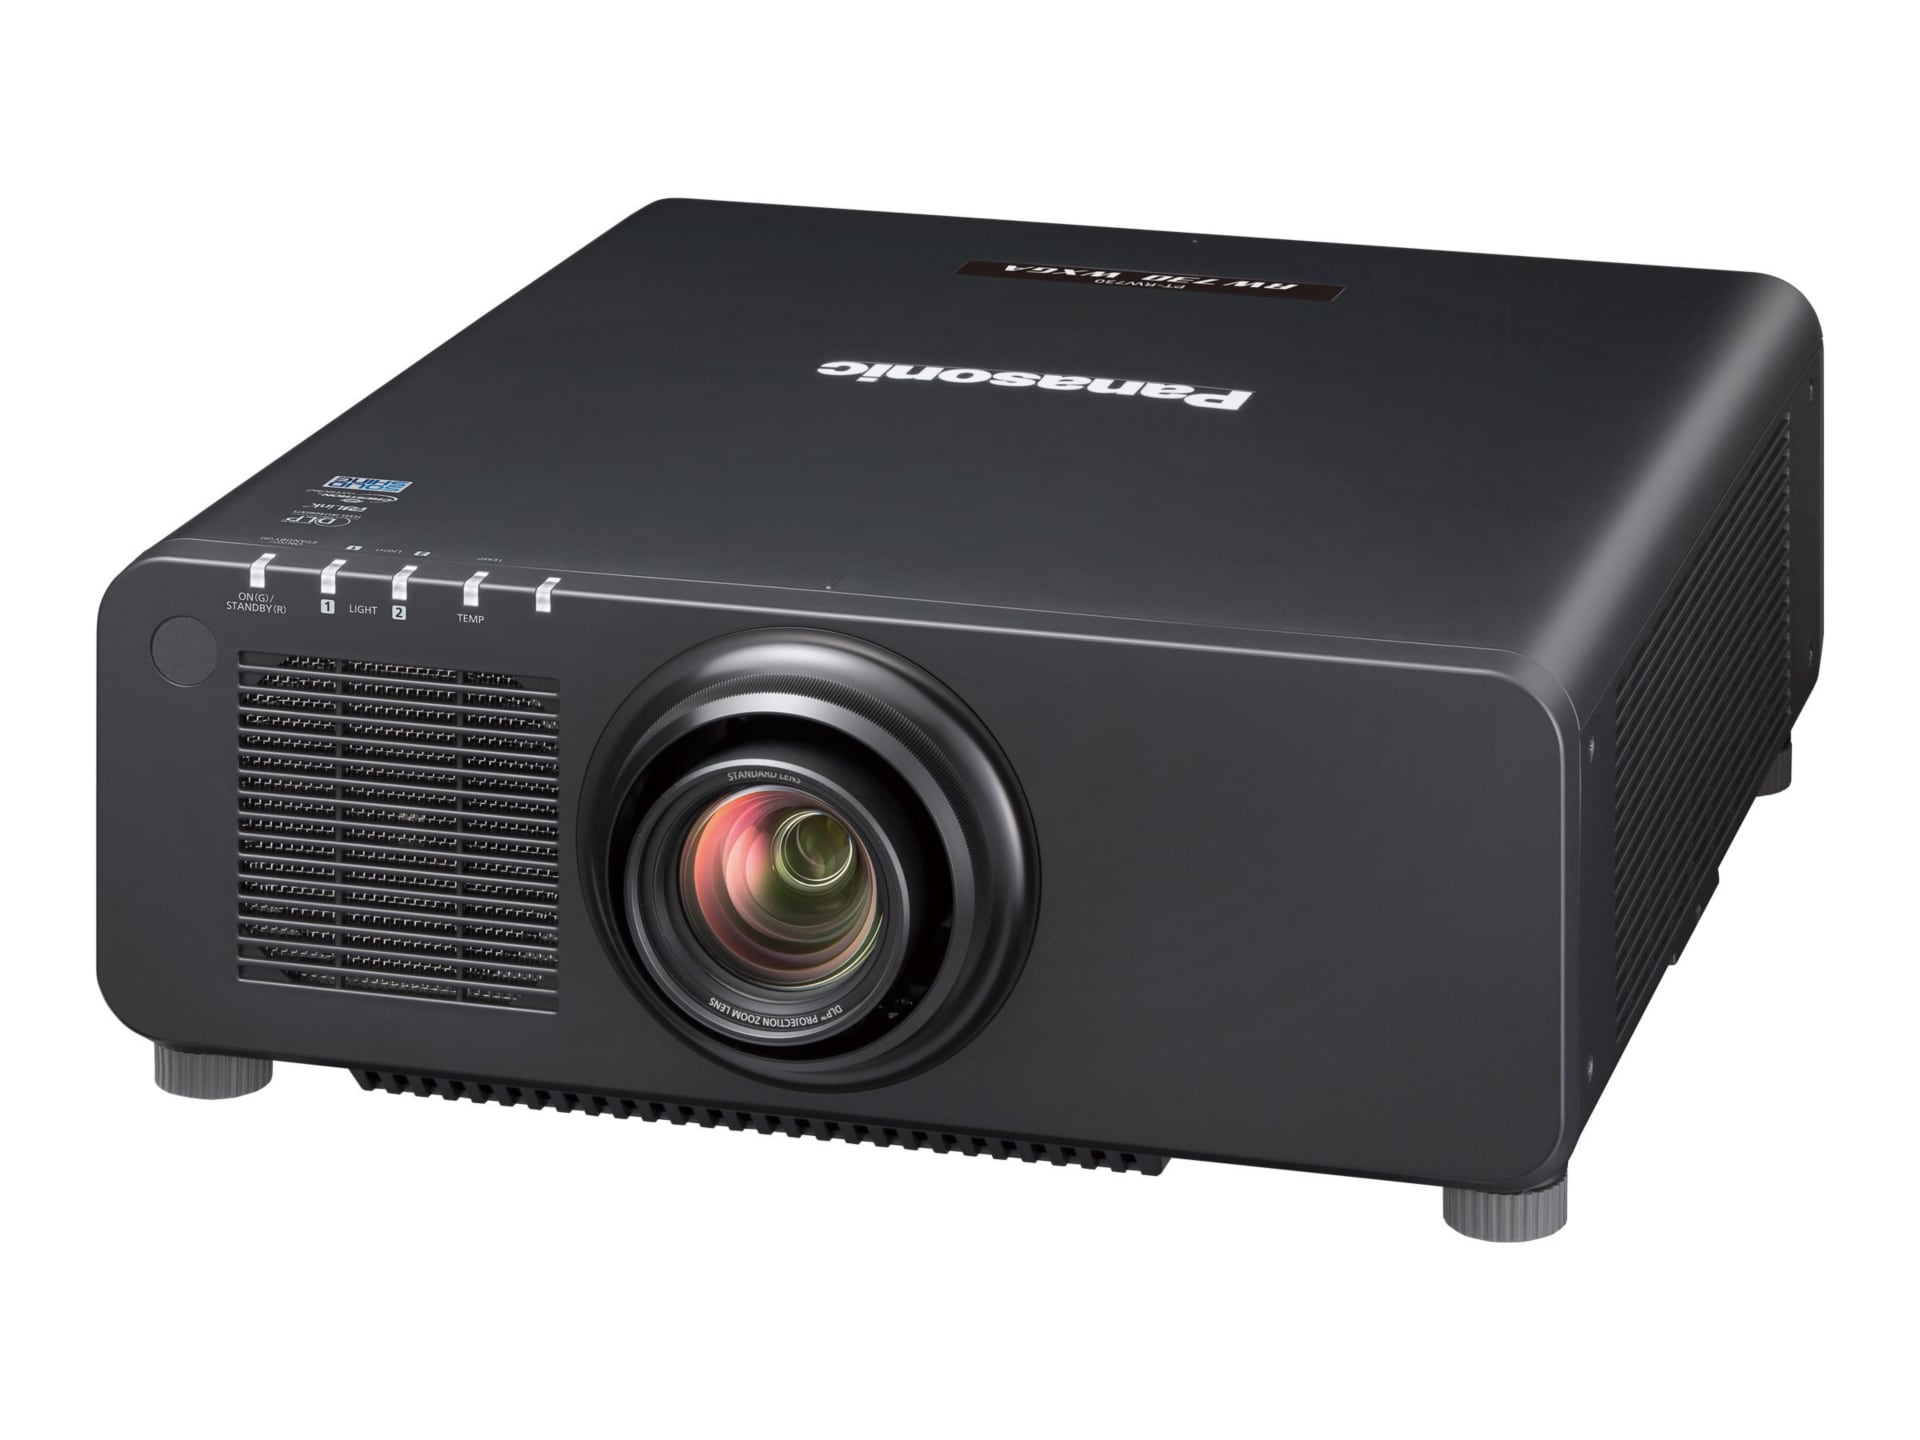 Panasonic PT-RW730BU - DLP projector - LAN